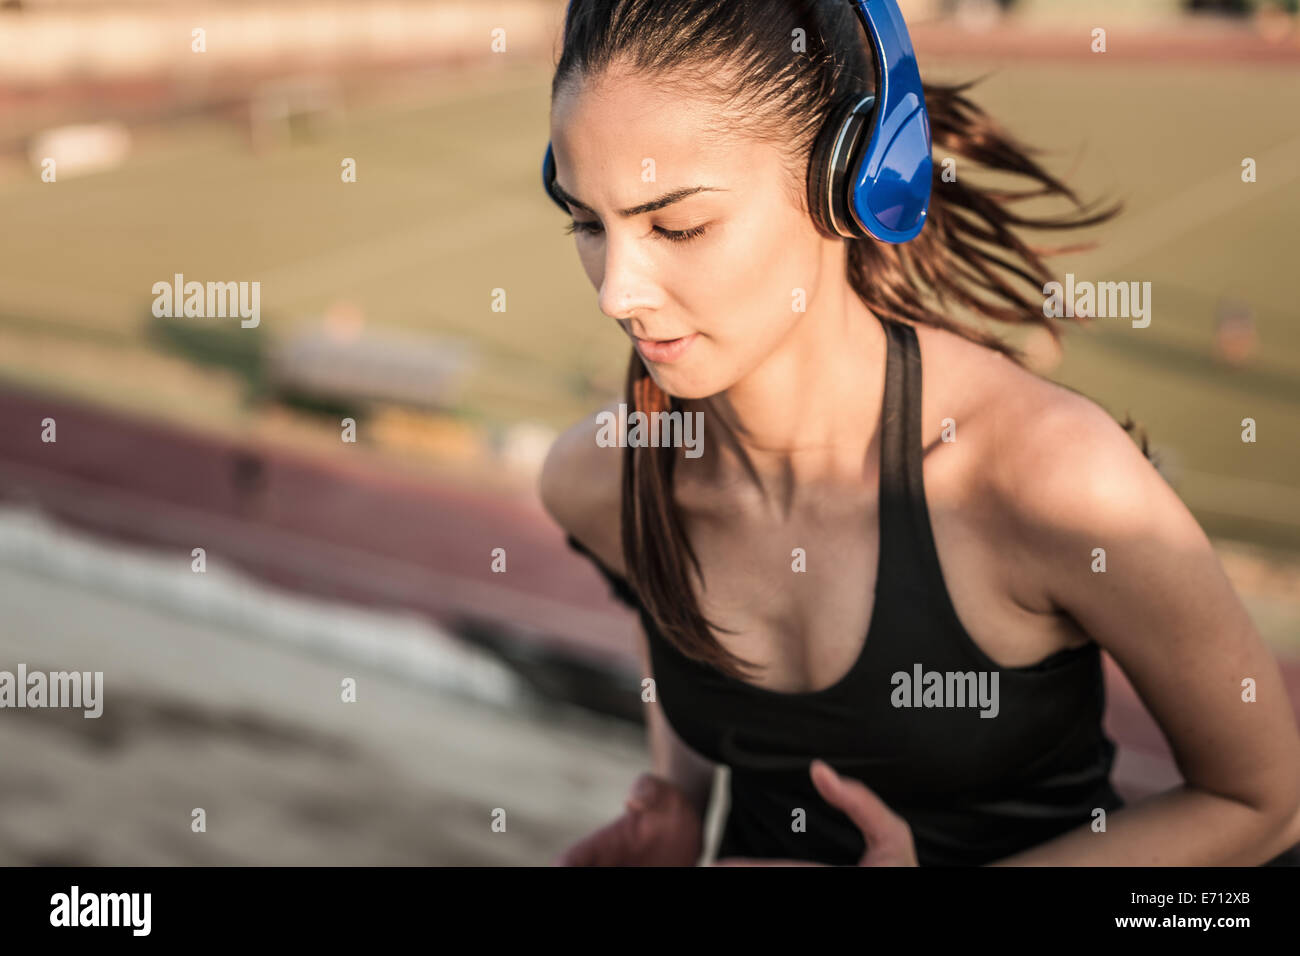 Young woman wearing headphones running Stock Photo